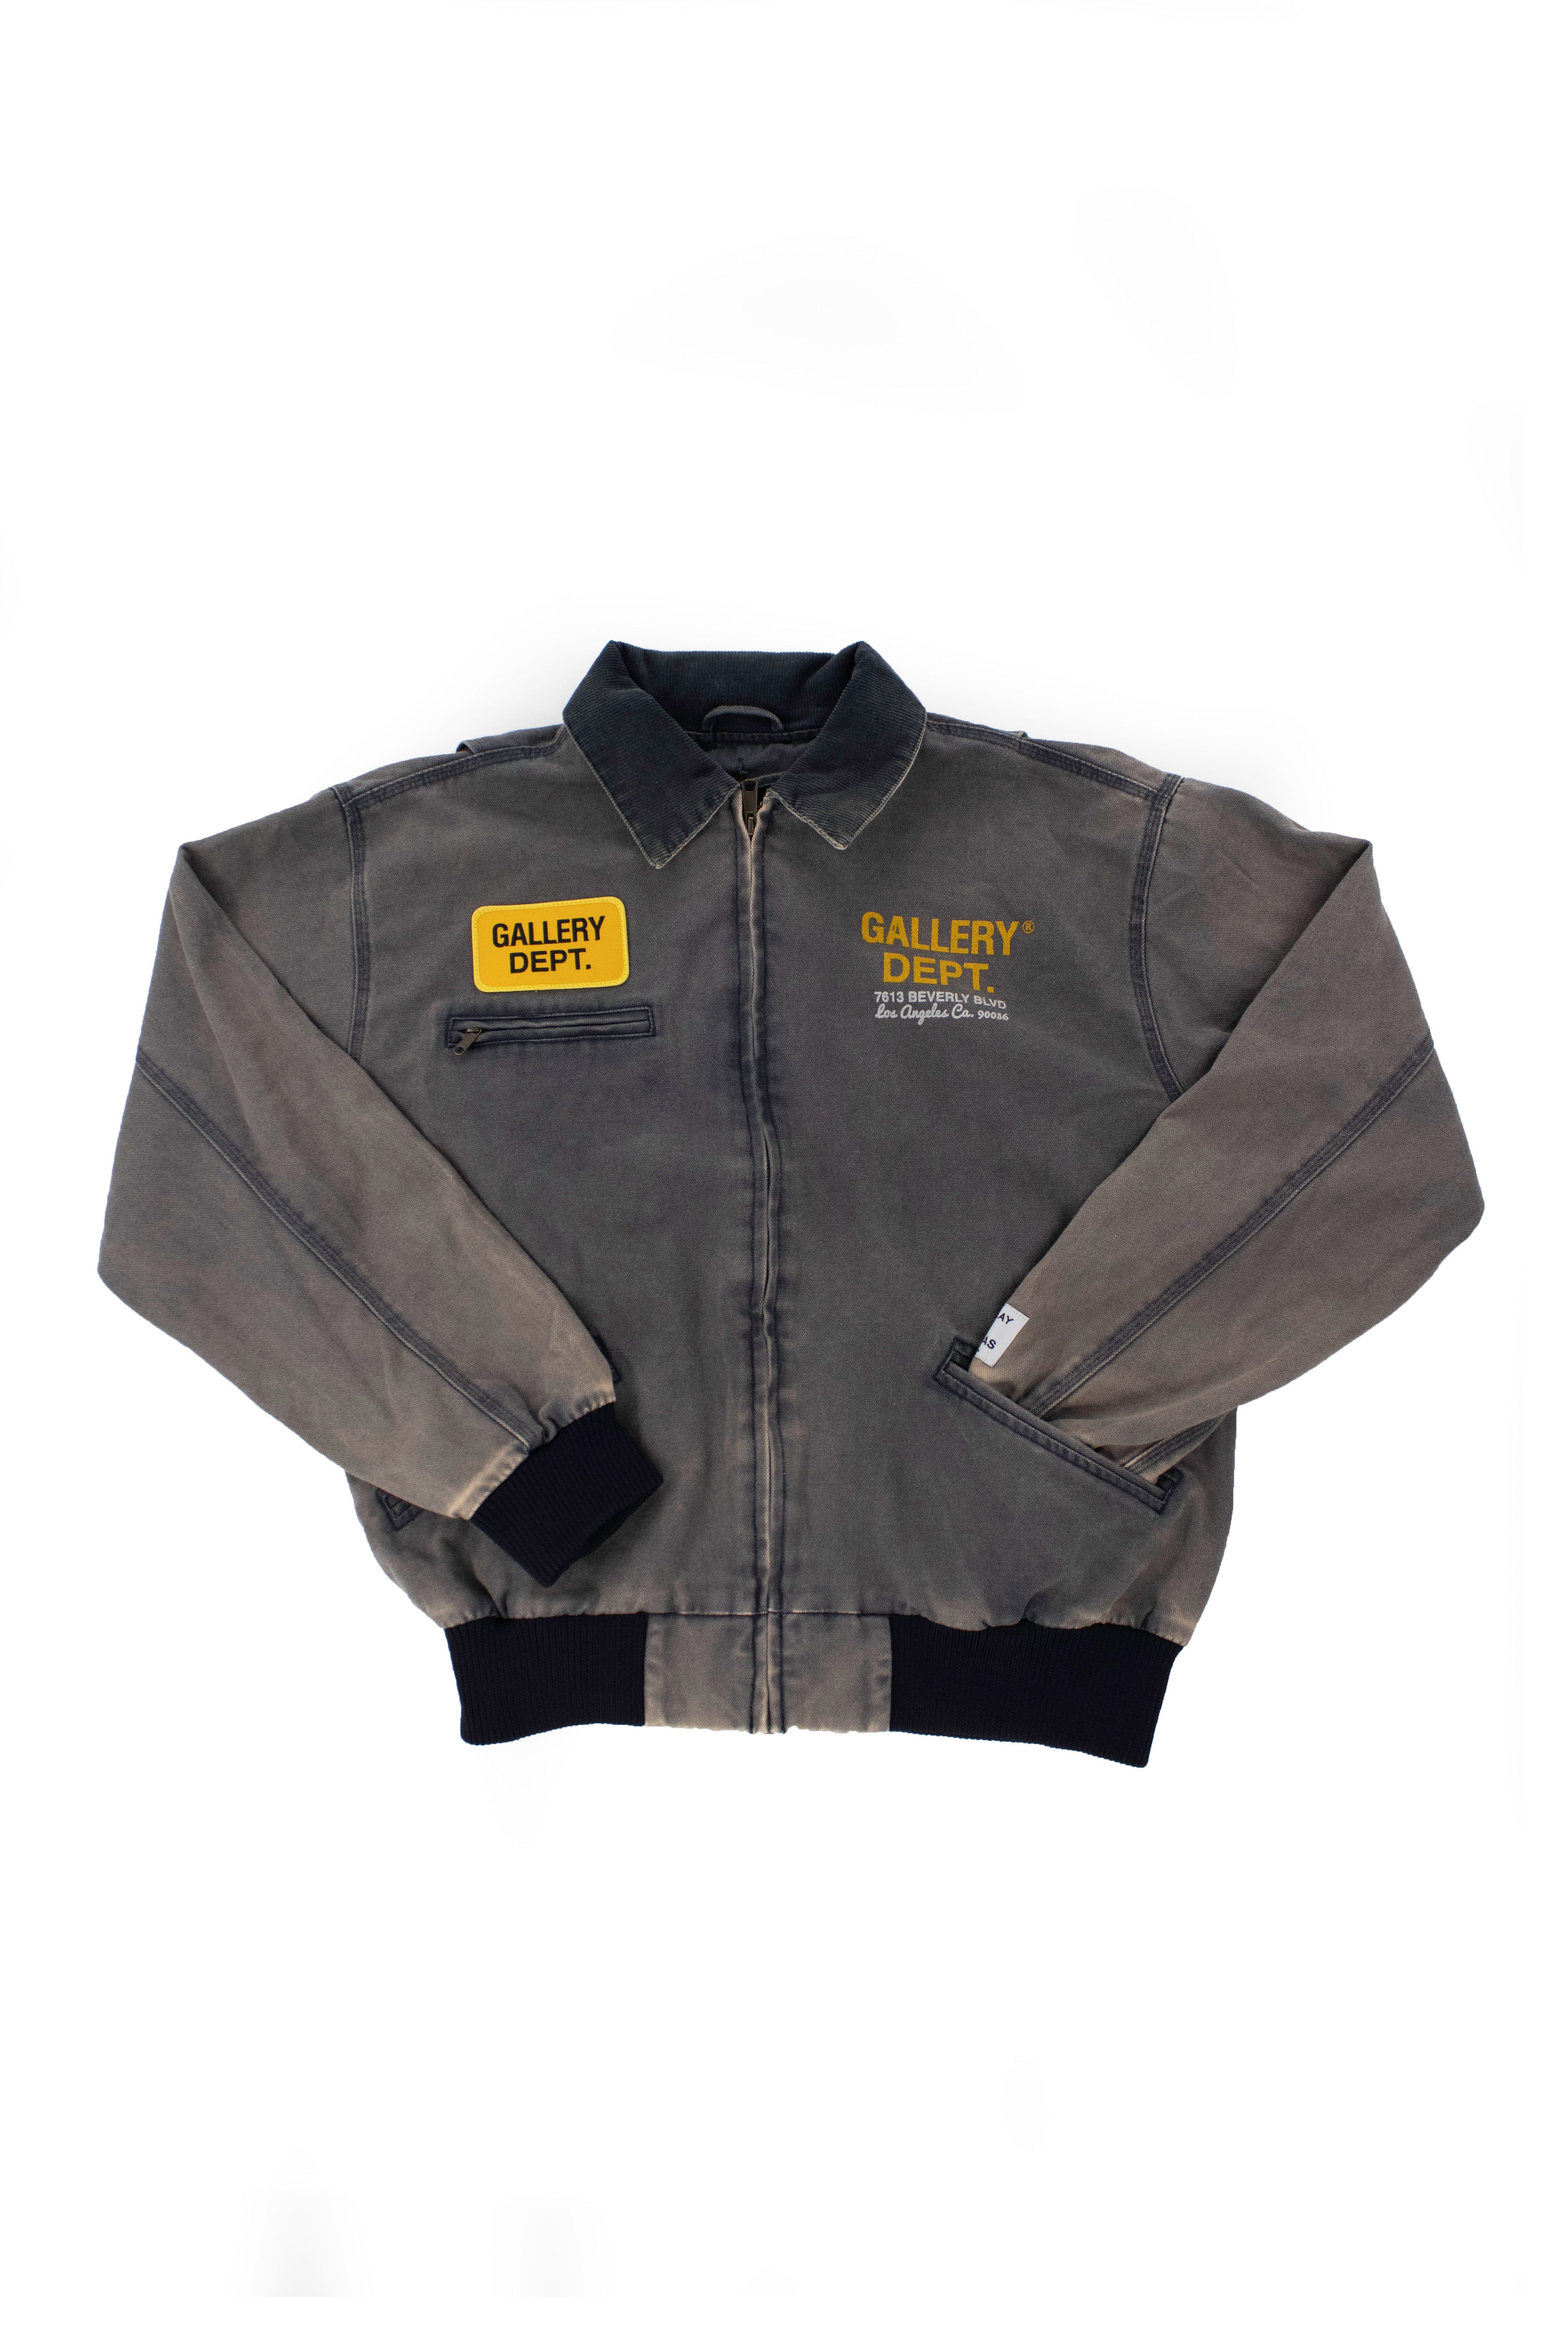 GALLERY DEPT.Mechanic Jacket SMギャラリー デプト | chidori.co